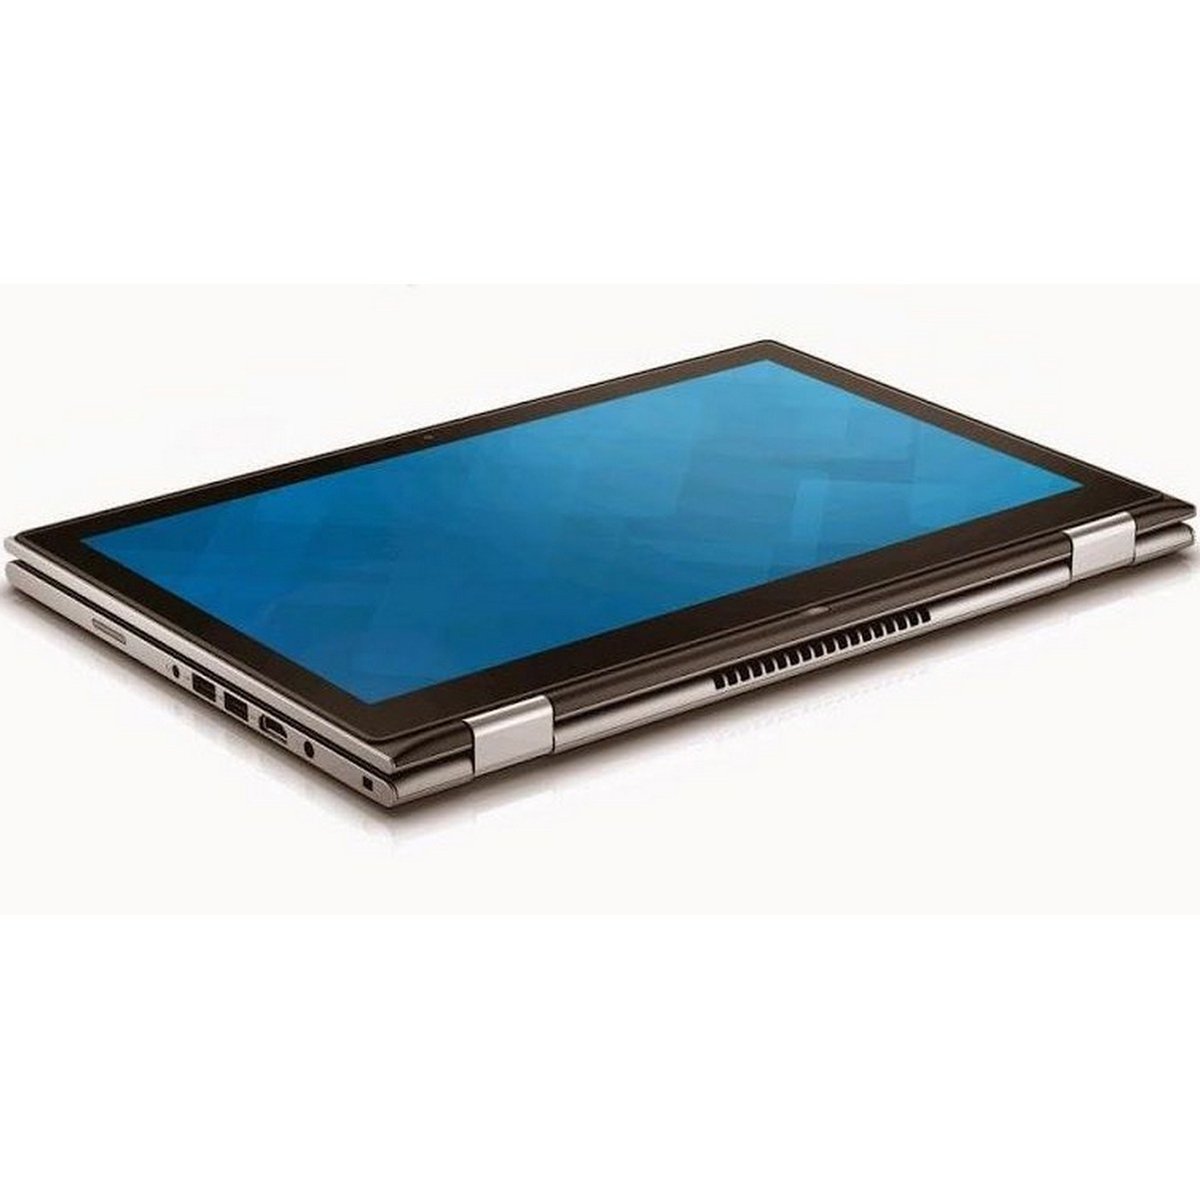 Dell Notebook 5370-INS-1153 Core i5 Silver